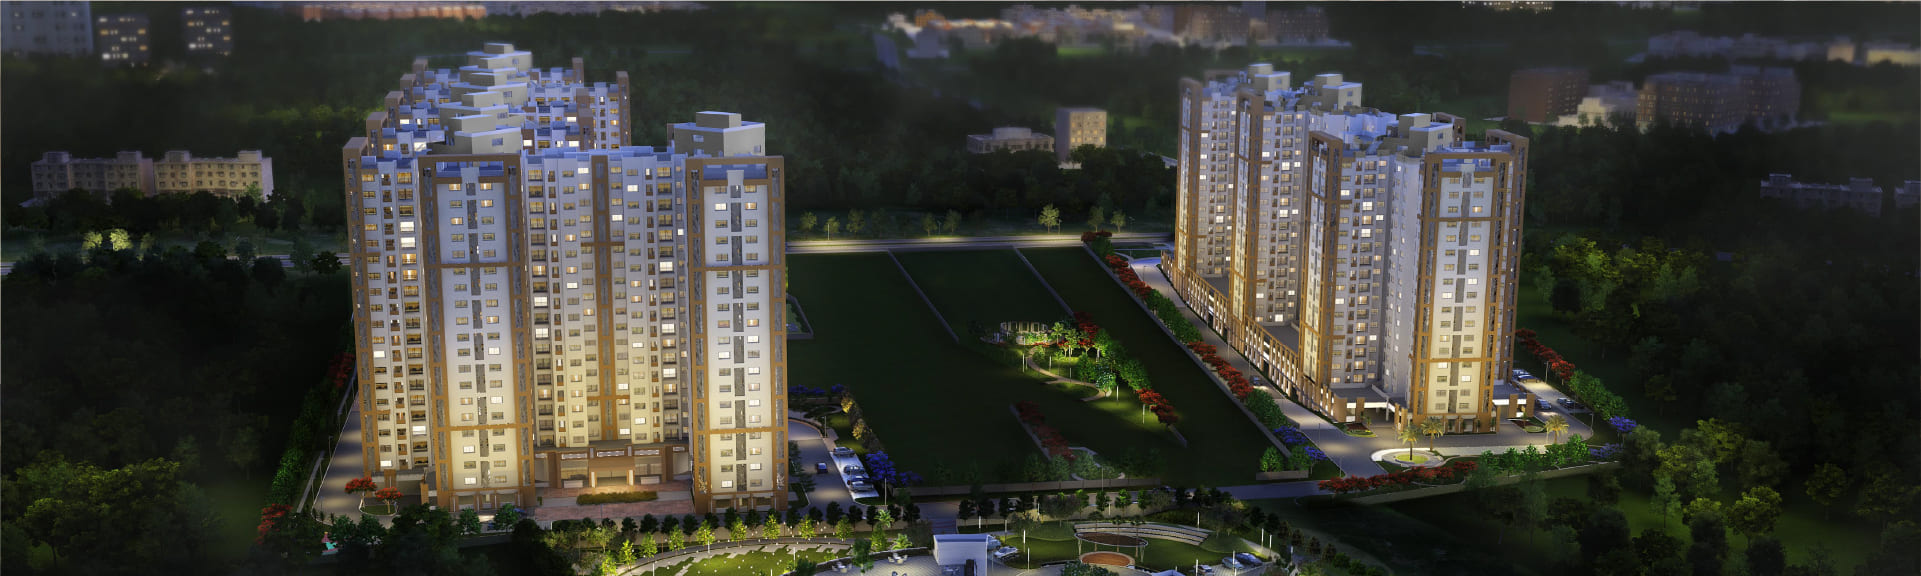 hriram Greenfield, 2 BHK apartments in Whitefield, Budigere Cross, Bangalore